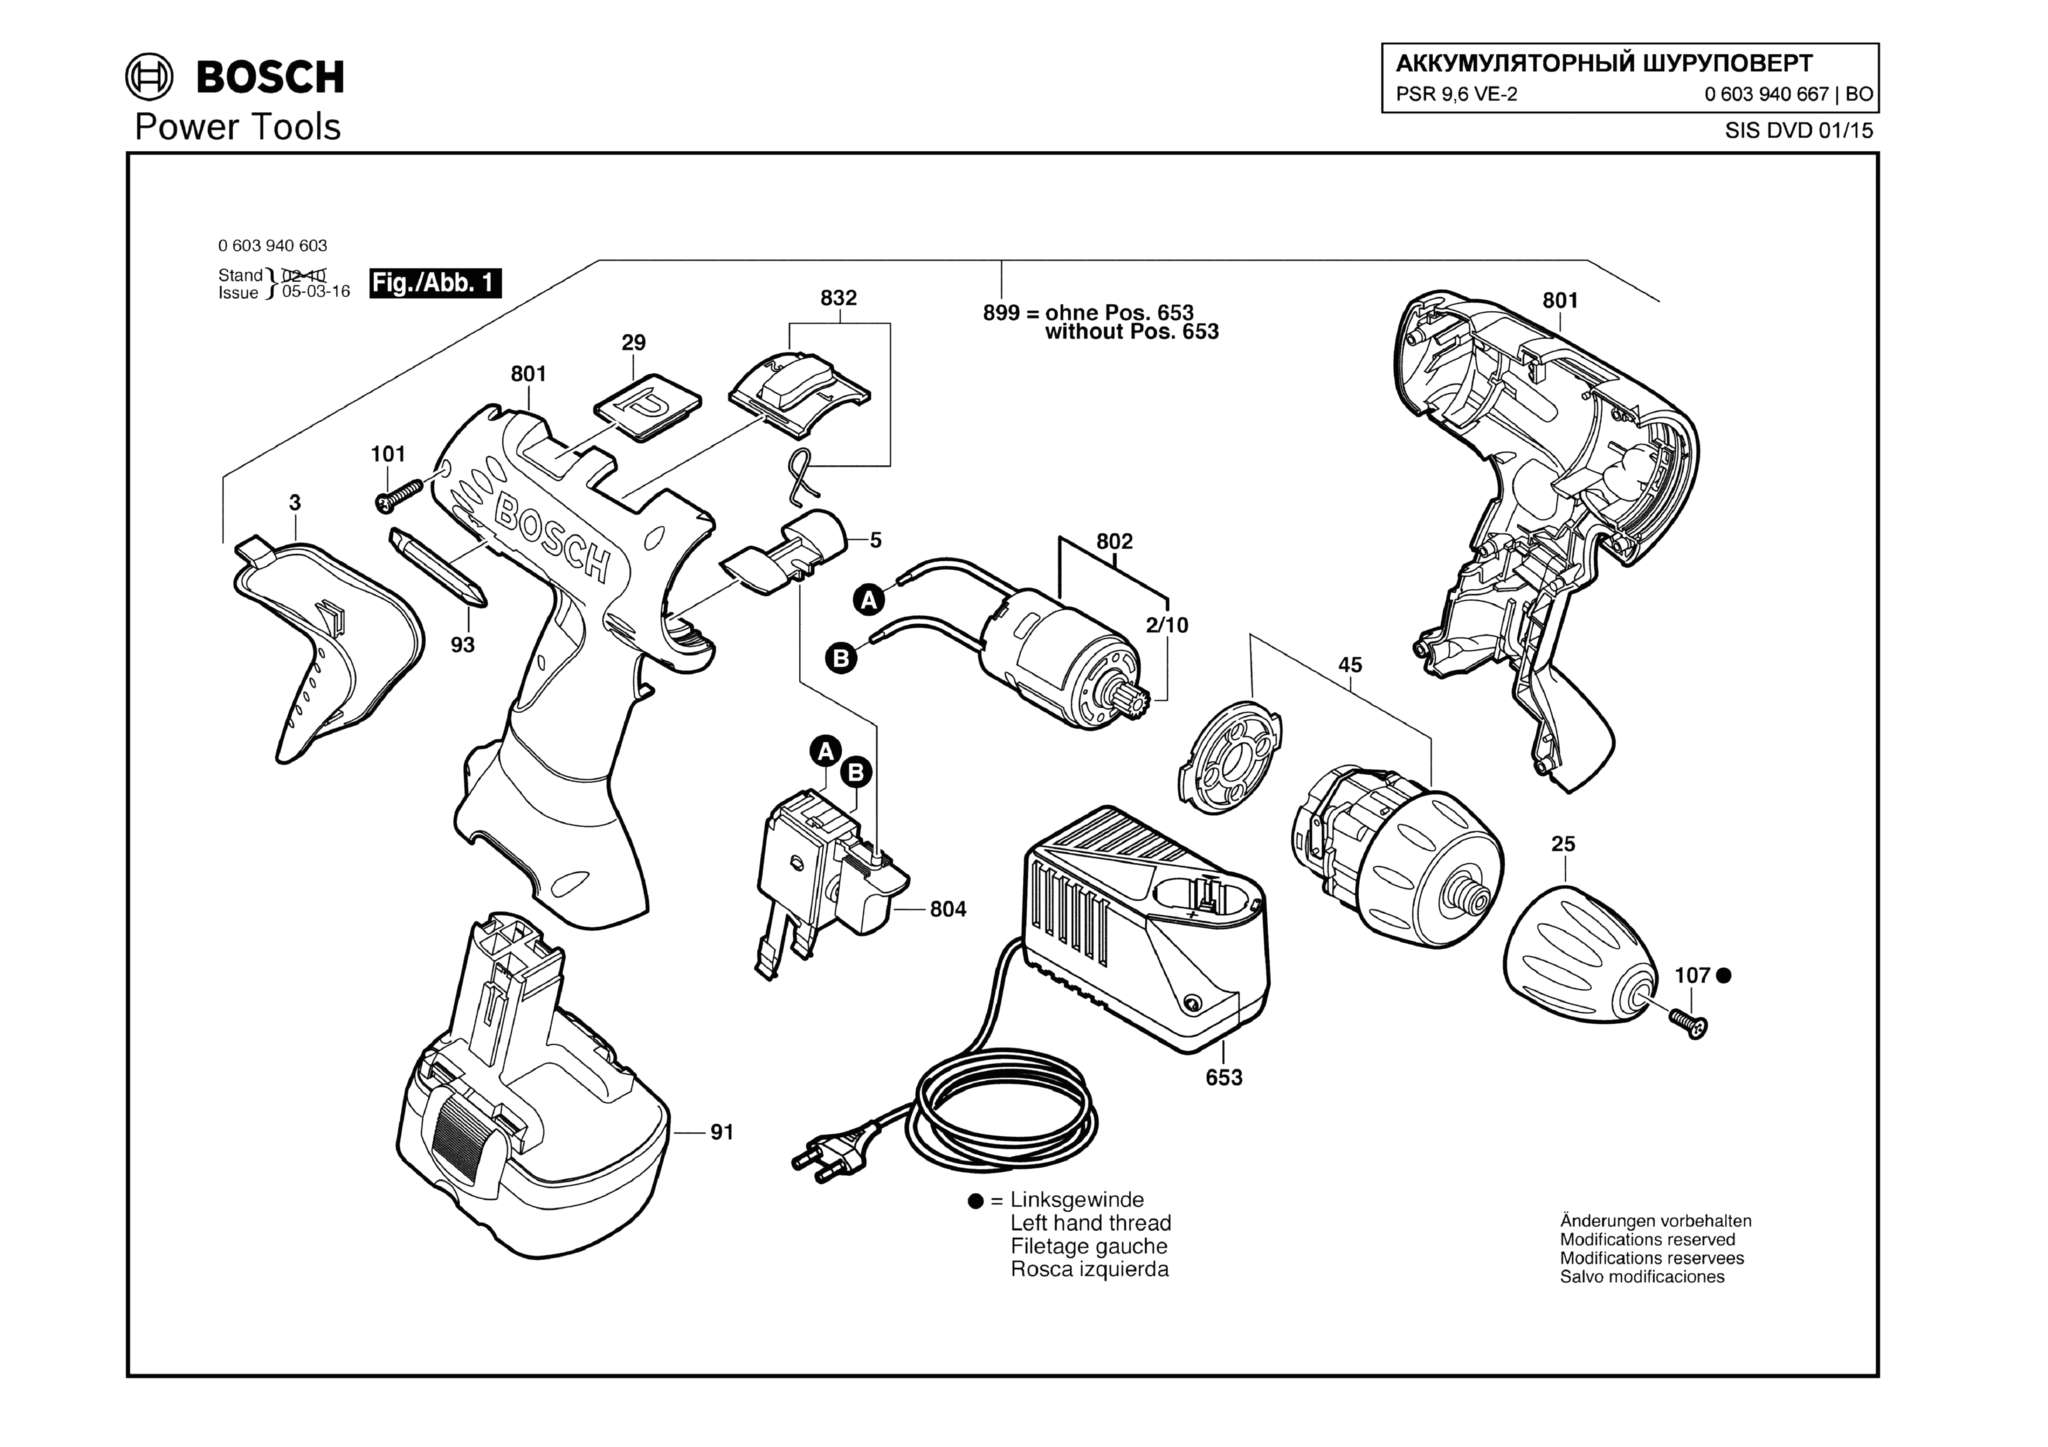 Запчасти, схема и деталировка Bosch PSR 9,6 VE-2 (ТИП 0603940667)